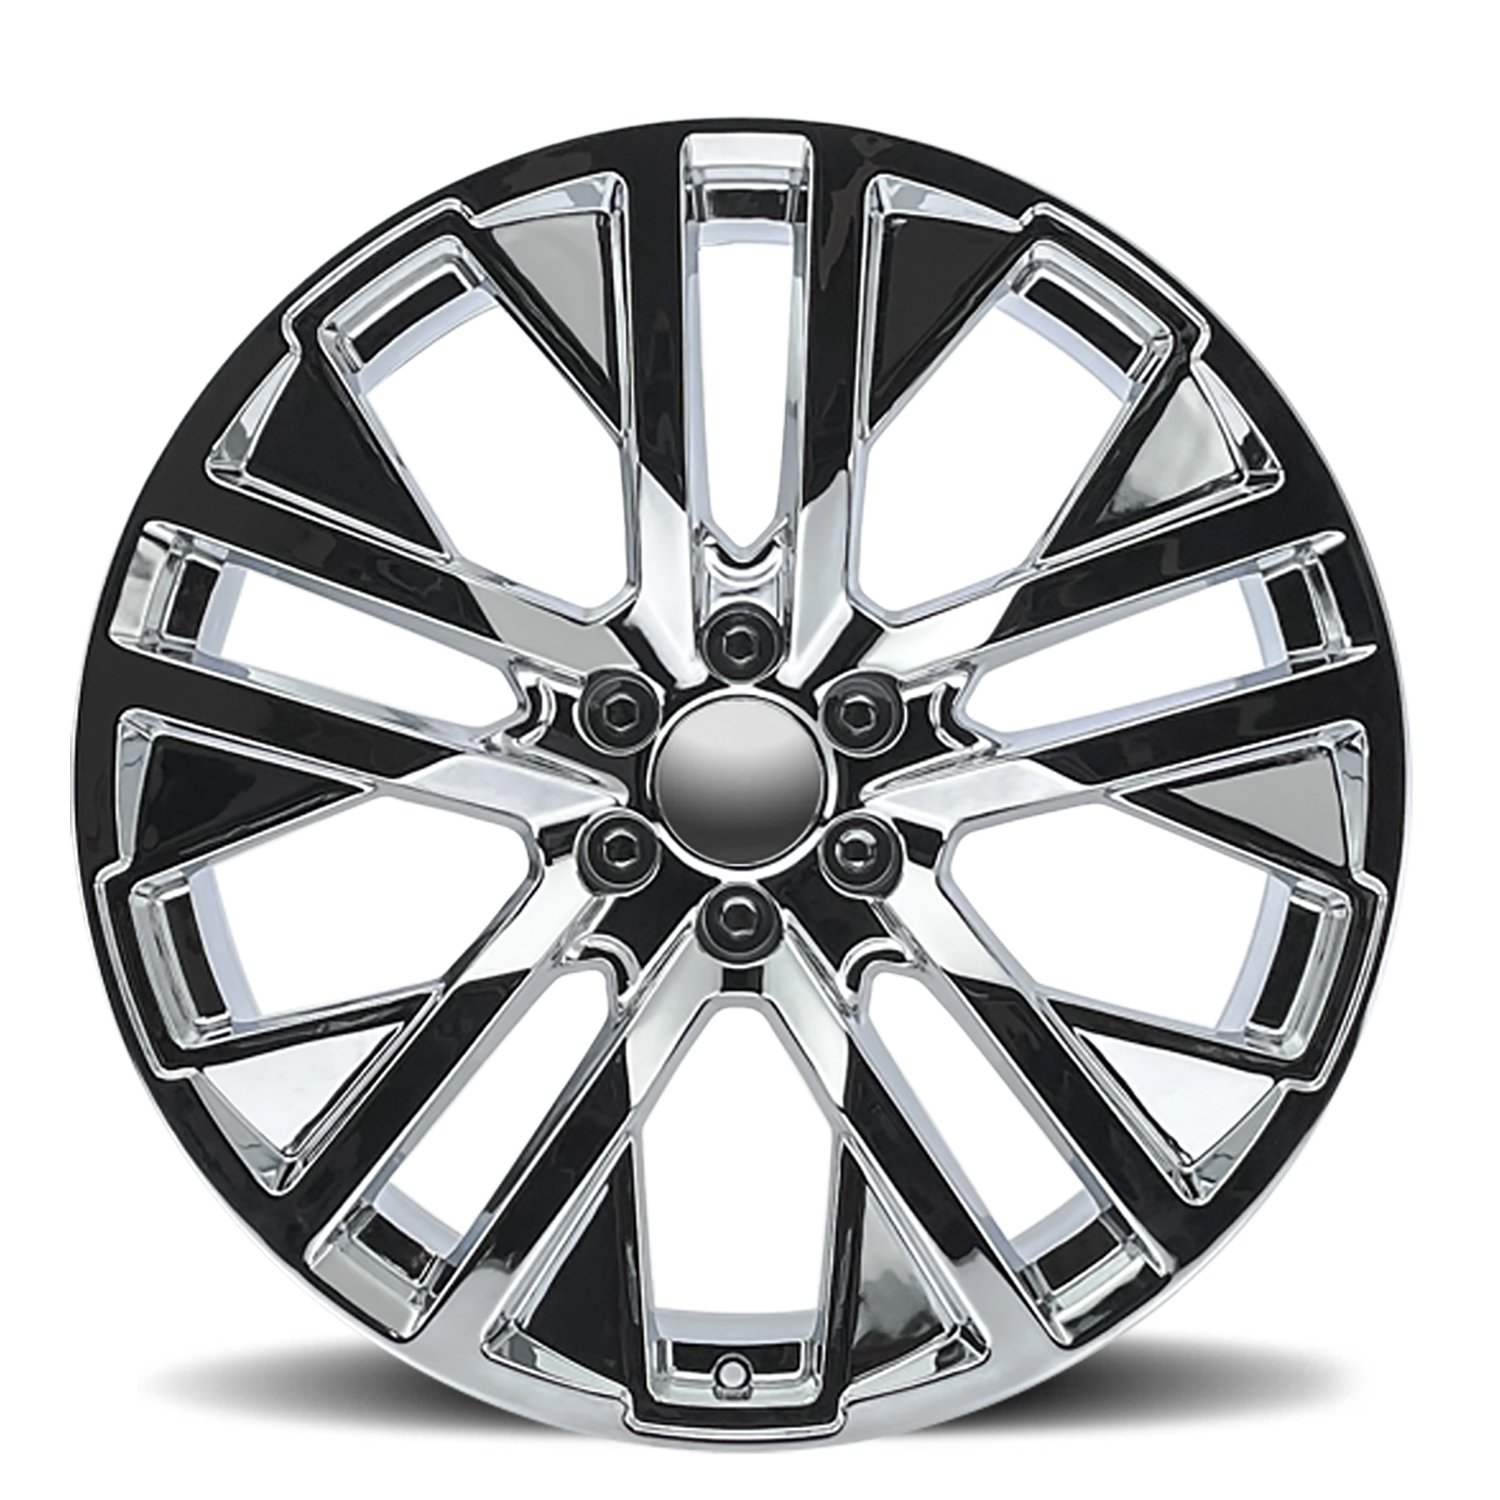 FR96-2410-6lug-Chrome-01-GMC-CarbonPro-factory-reproductions-wheels-rims-face